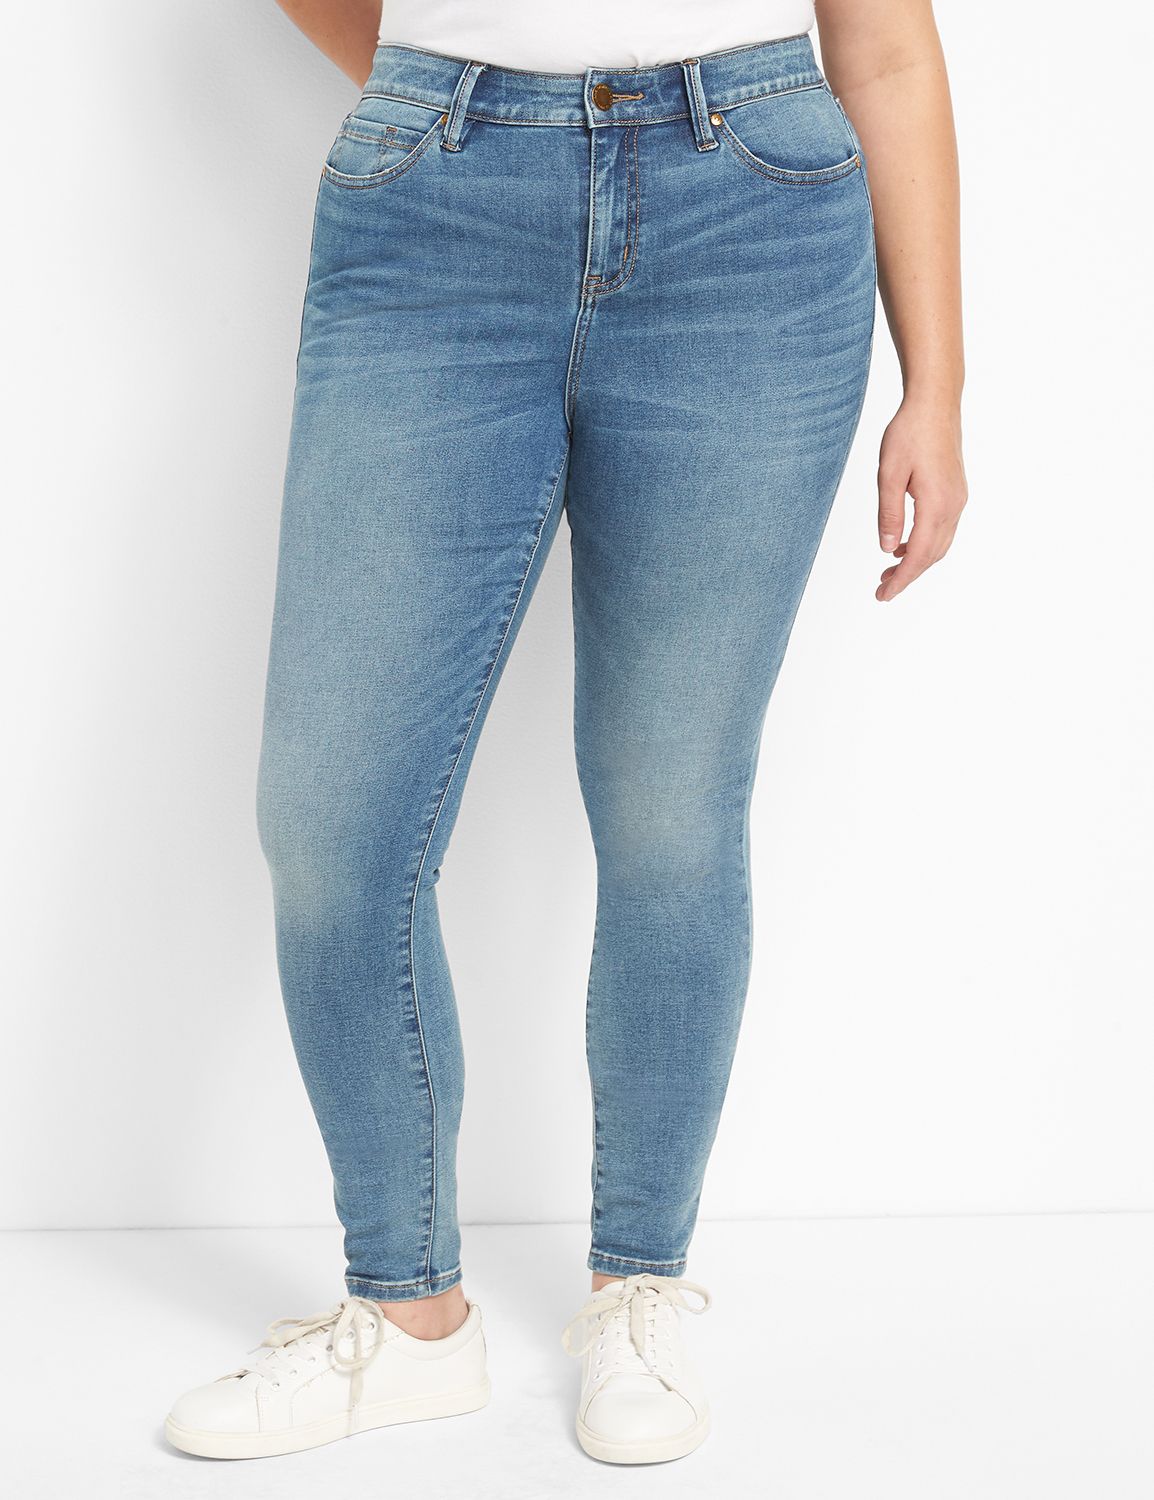 Petite Women's Medium Length Easy Fit Jean